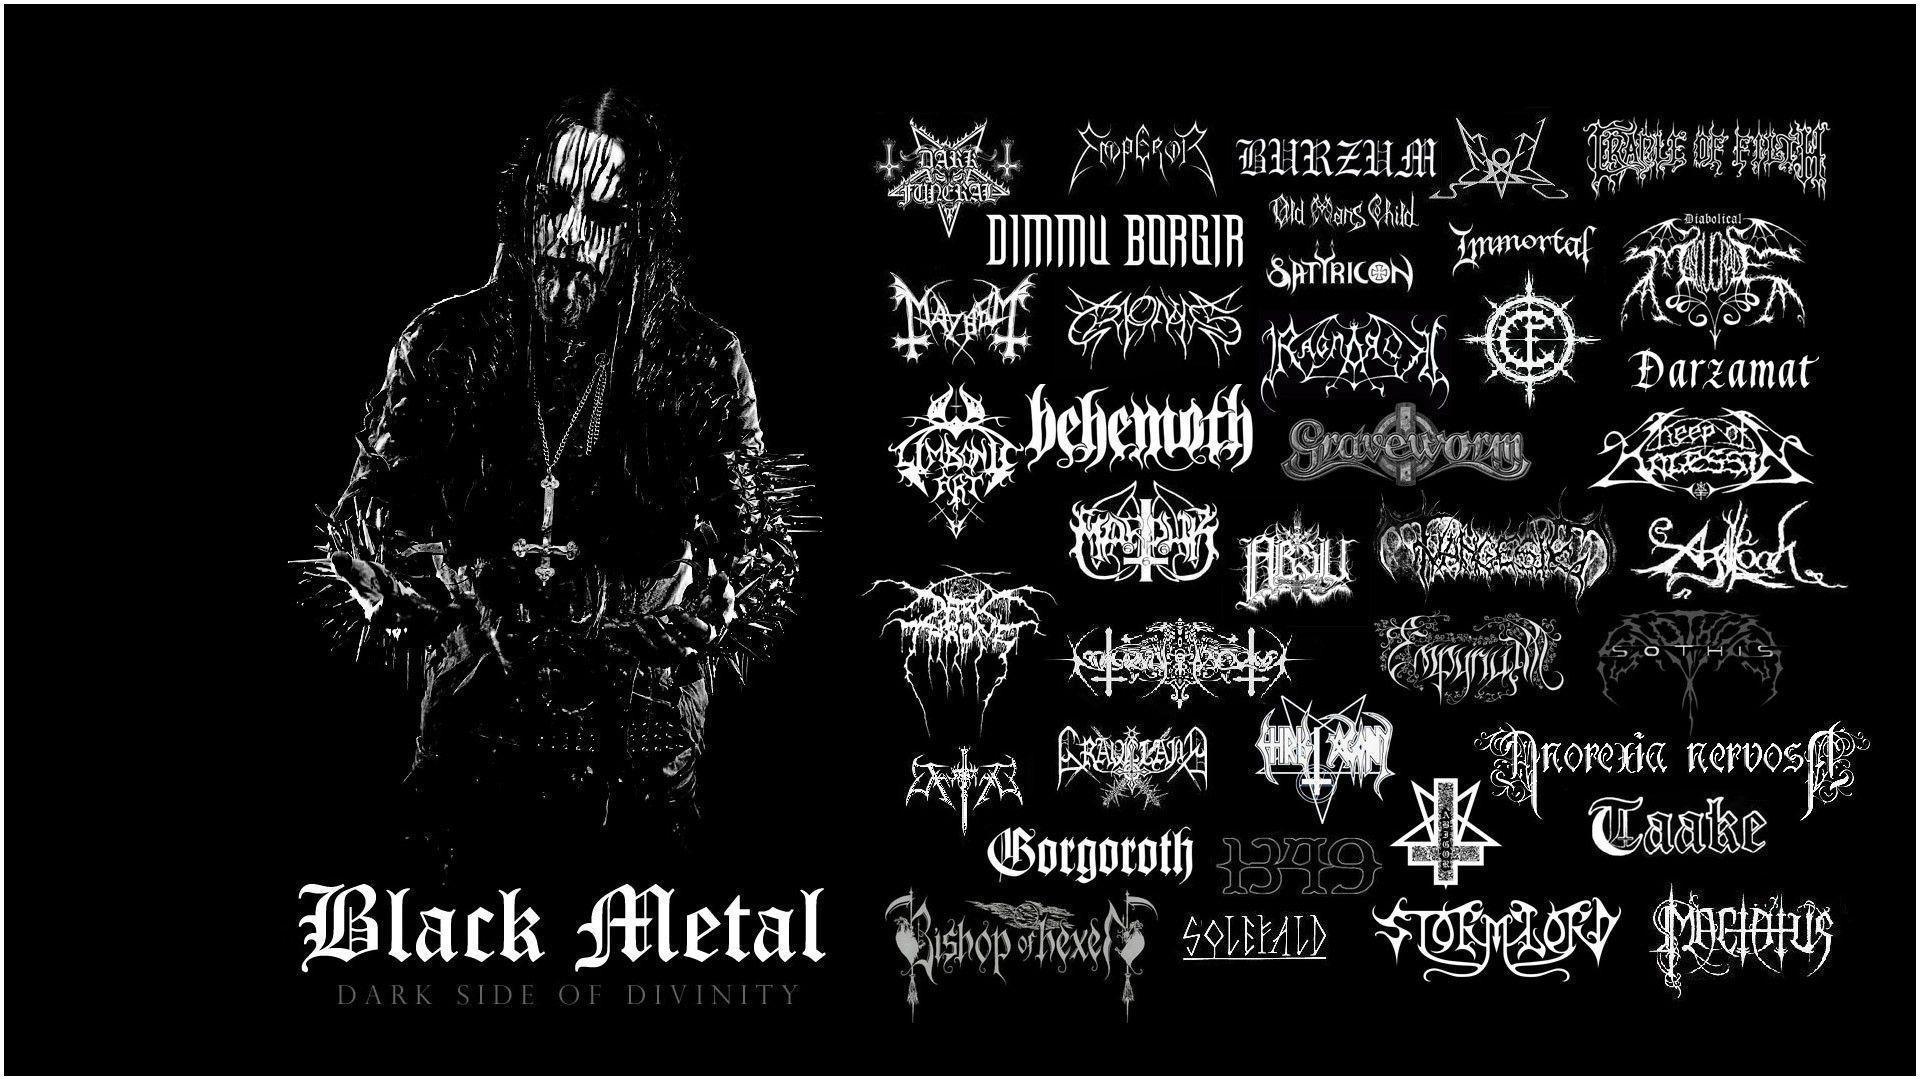 Black Metal Bands Wallpapers - Wallpaper Cave